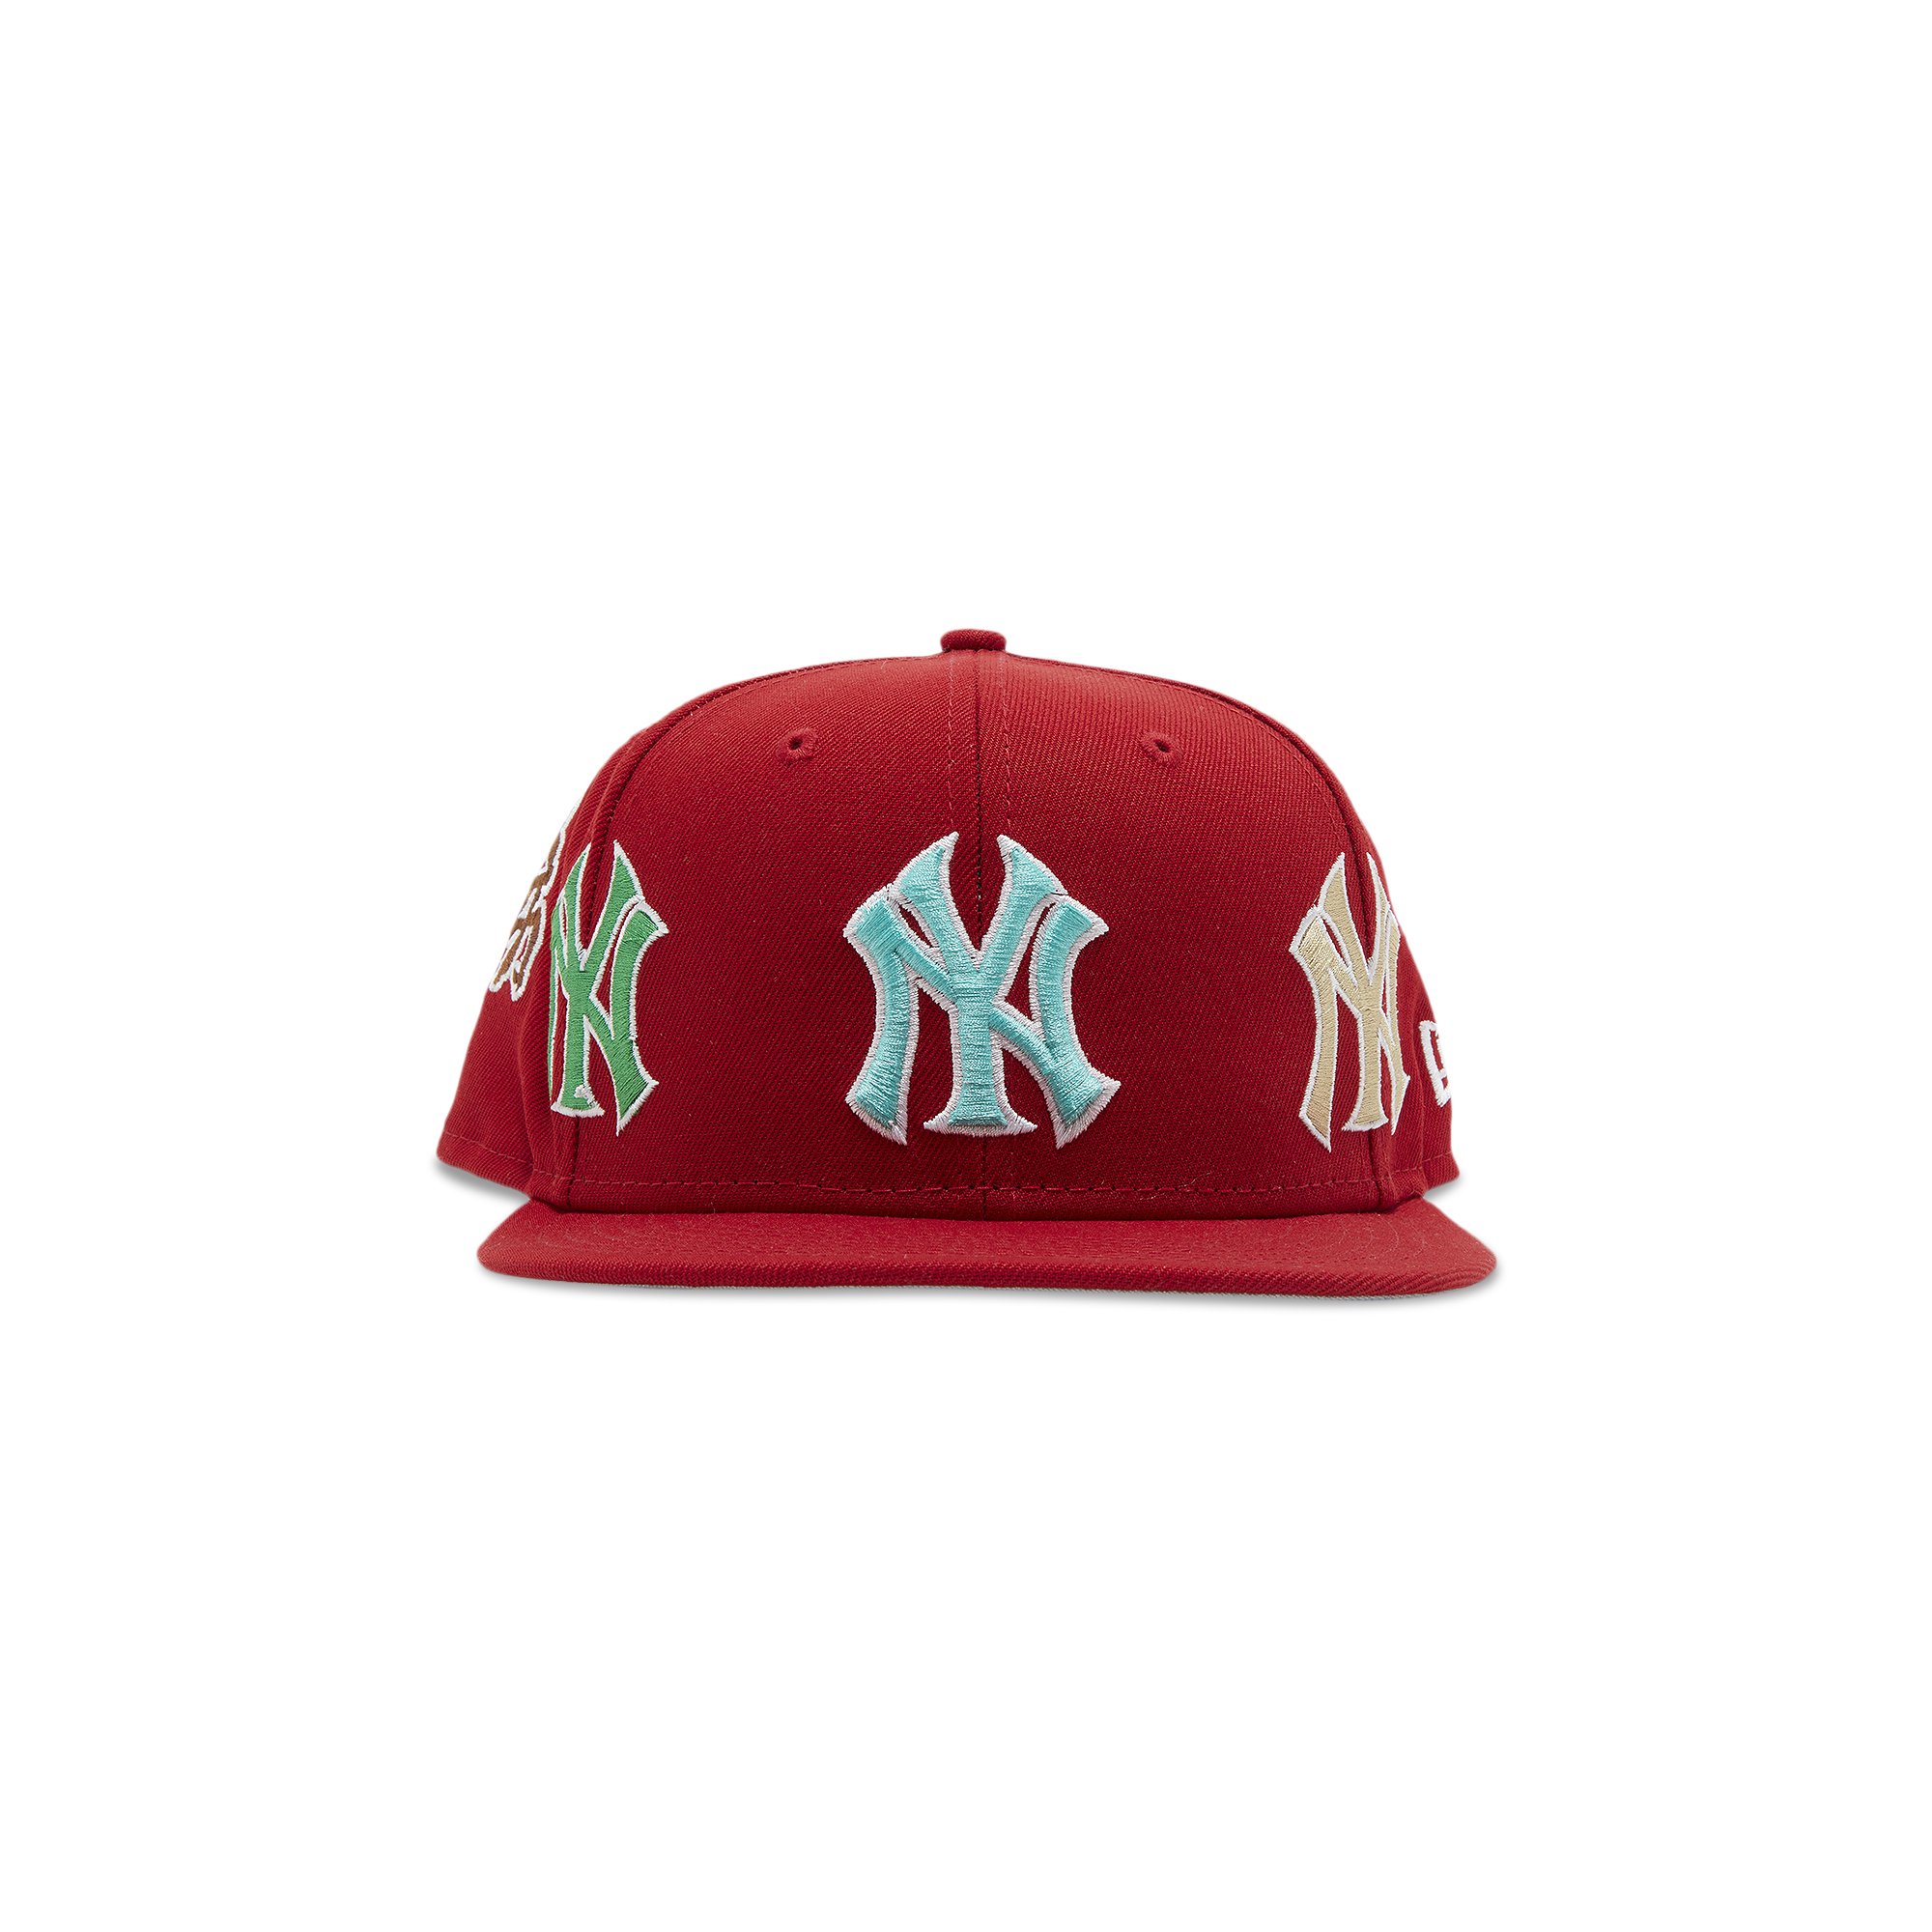 Buy Supreme x New York Yankees Kanji New Era 'Red' - FW22H76 RED